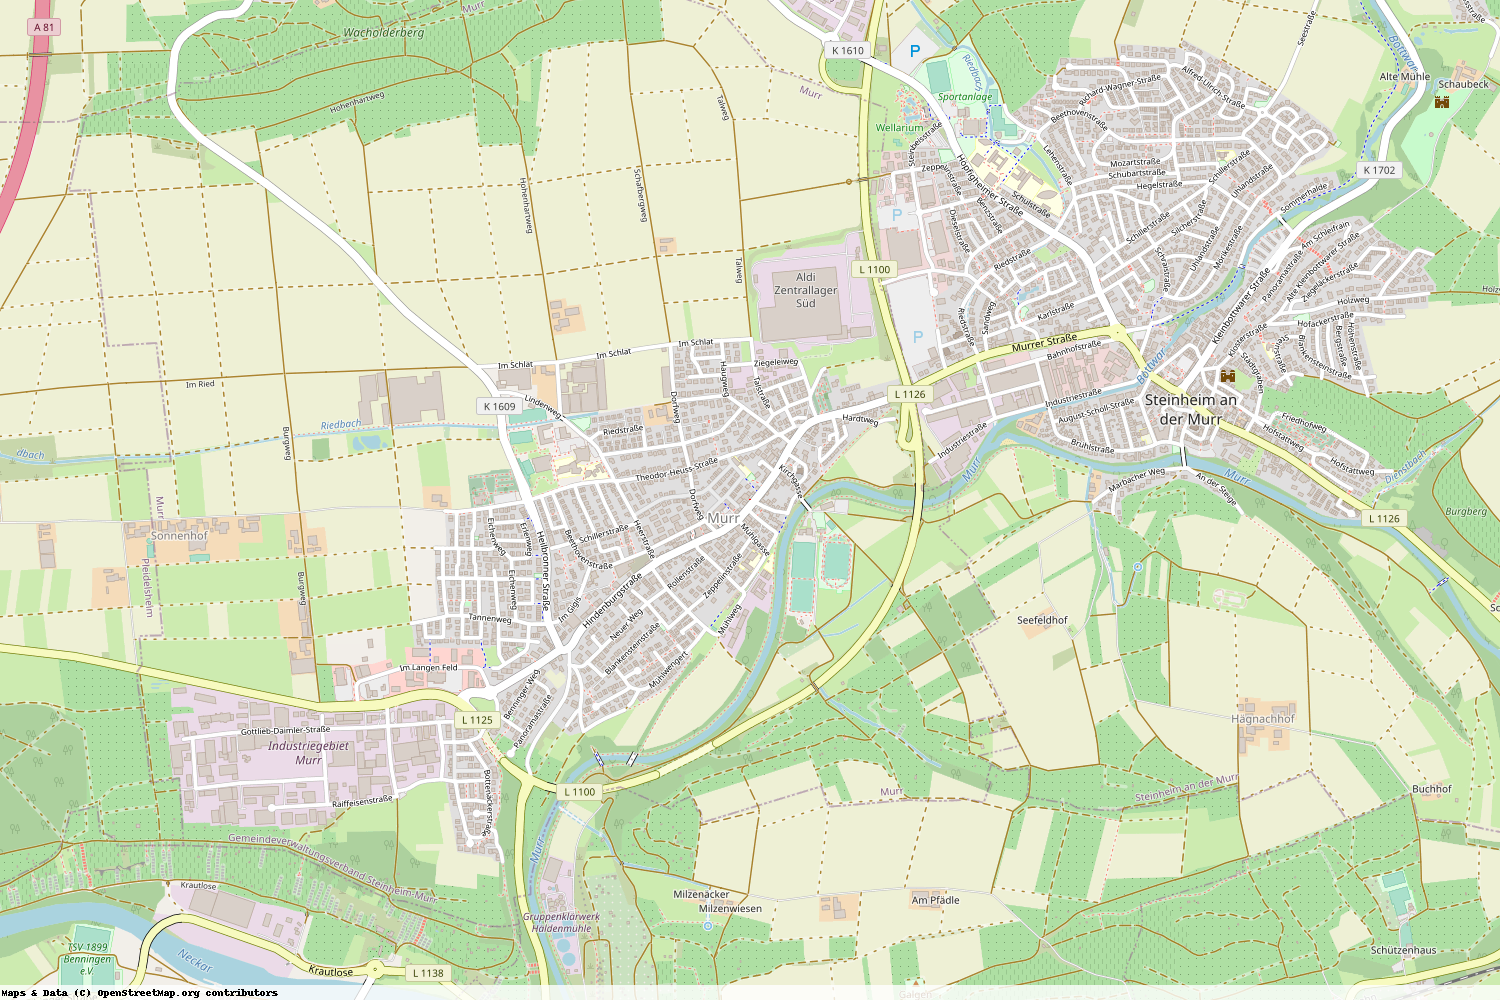 Ist gerade Stromausfall in Baden-Württemberg - Ludwigsburg - Murr?